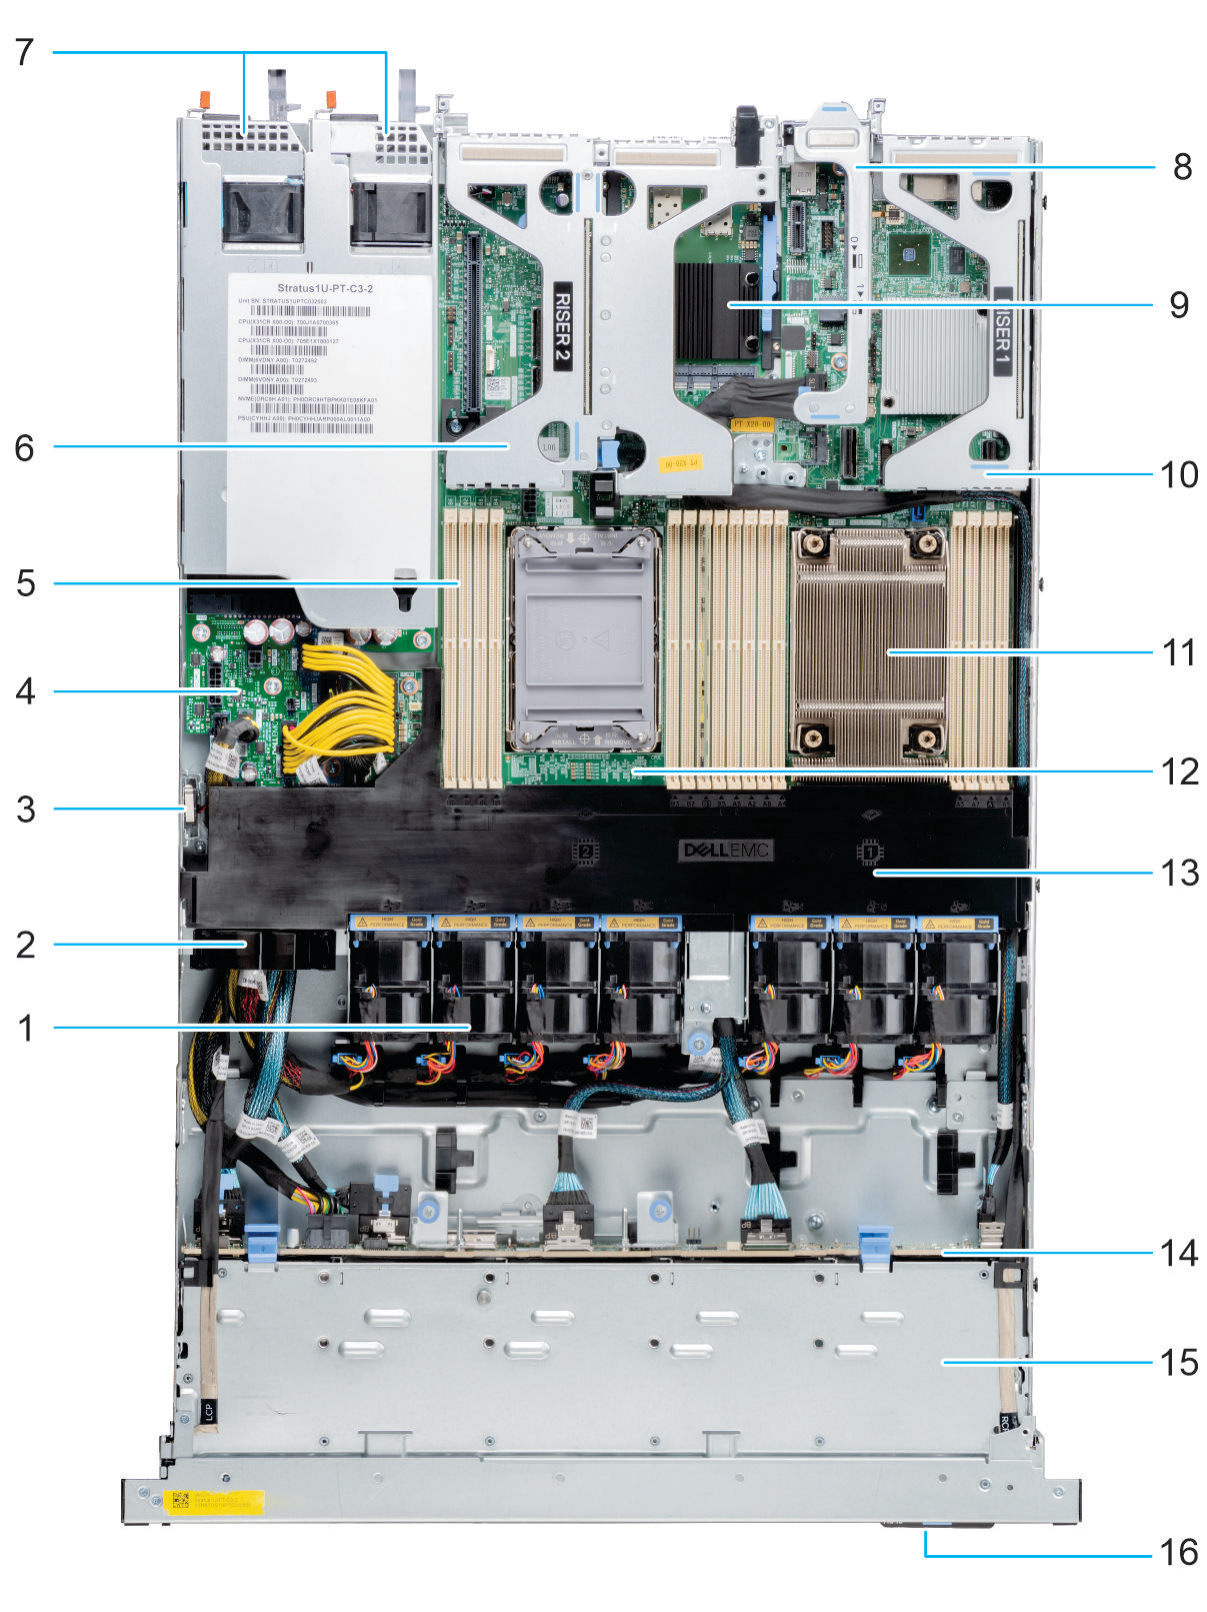 Inside the system of Dell EMC PowerEdge R450 1U Server